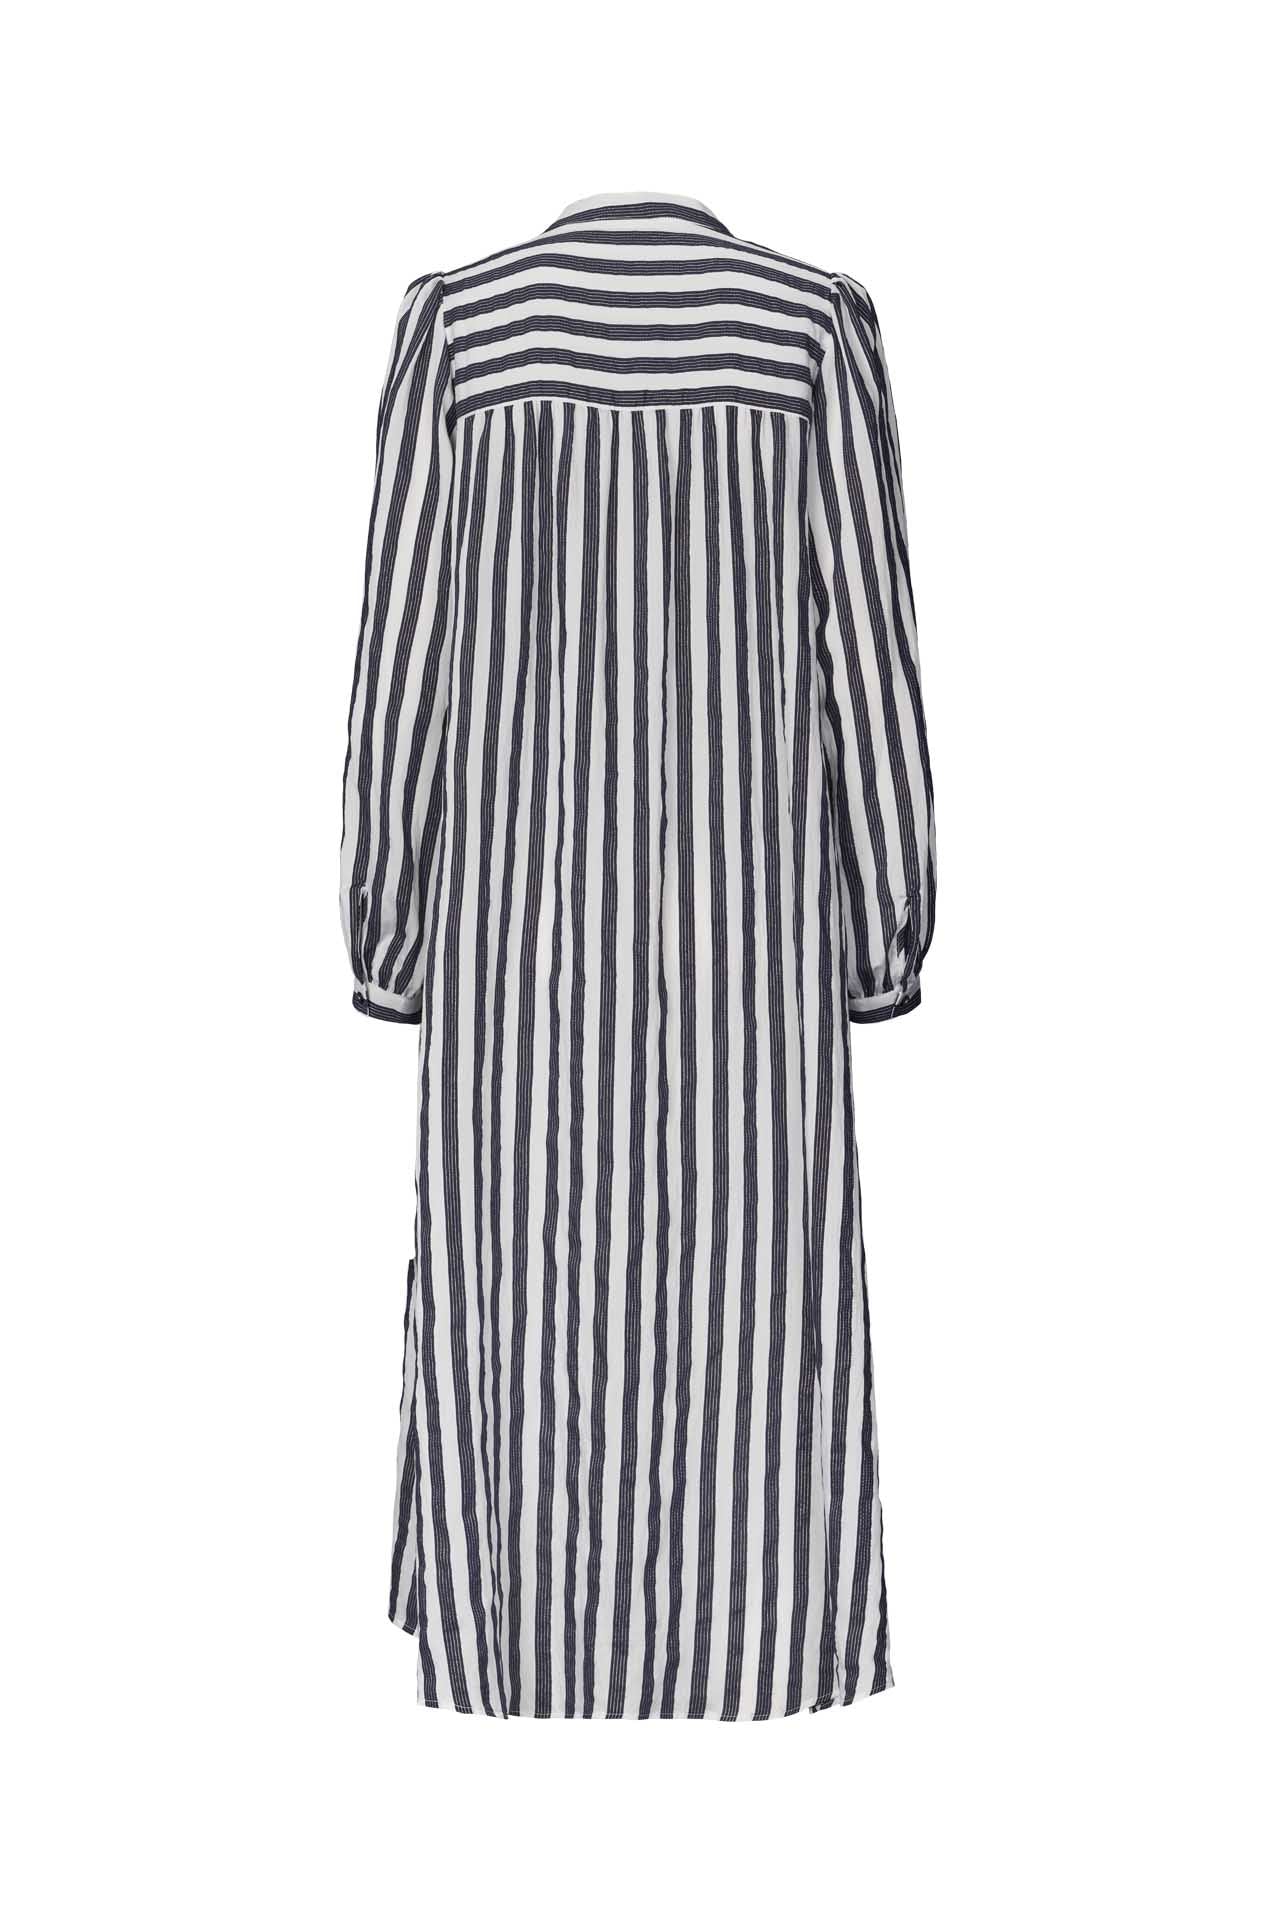 Lollys Laundry Jess Dress - Dark Blue Stripe